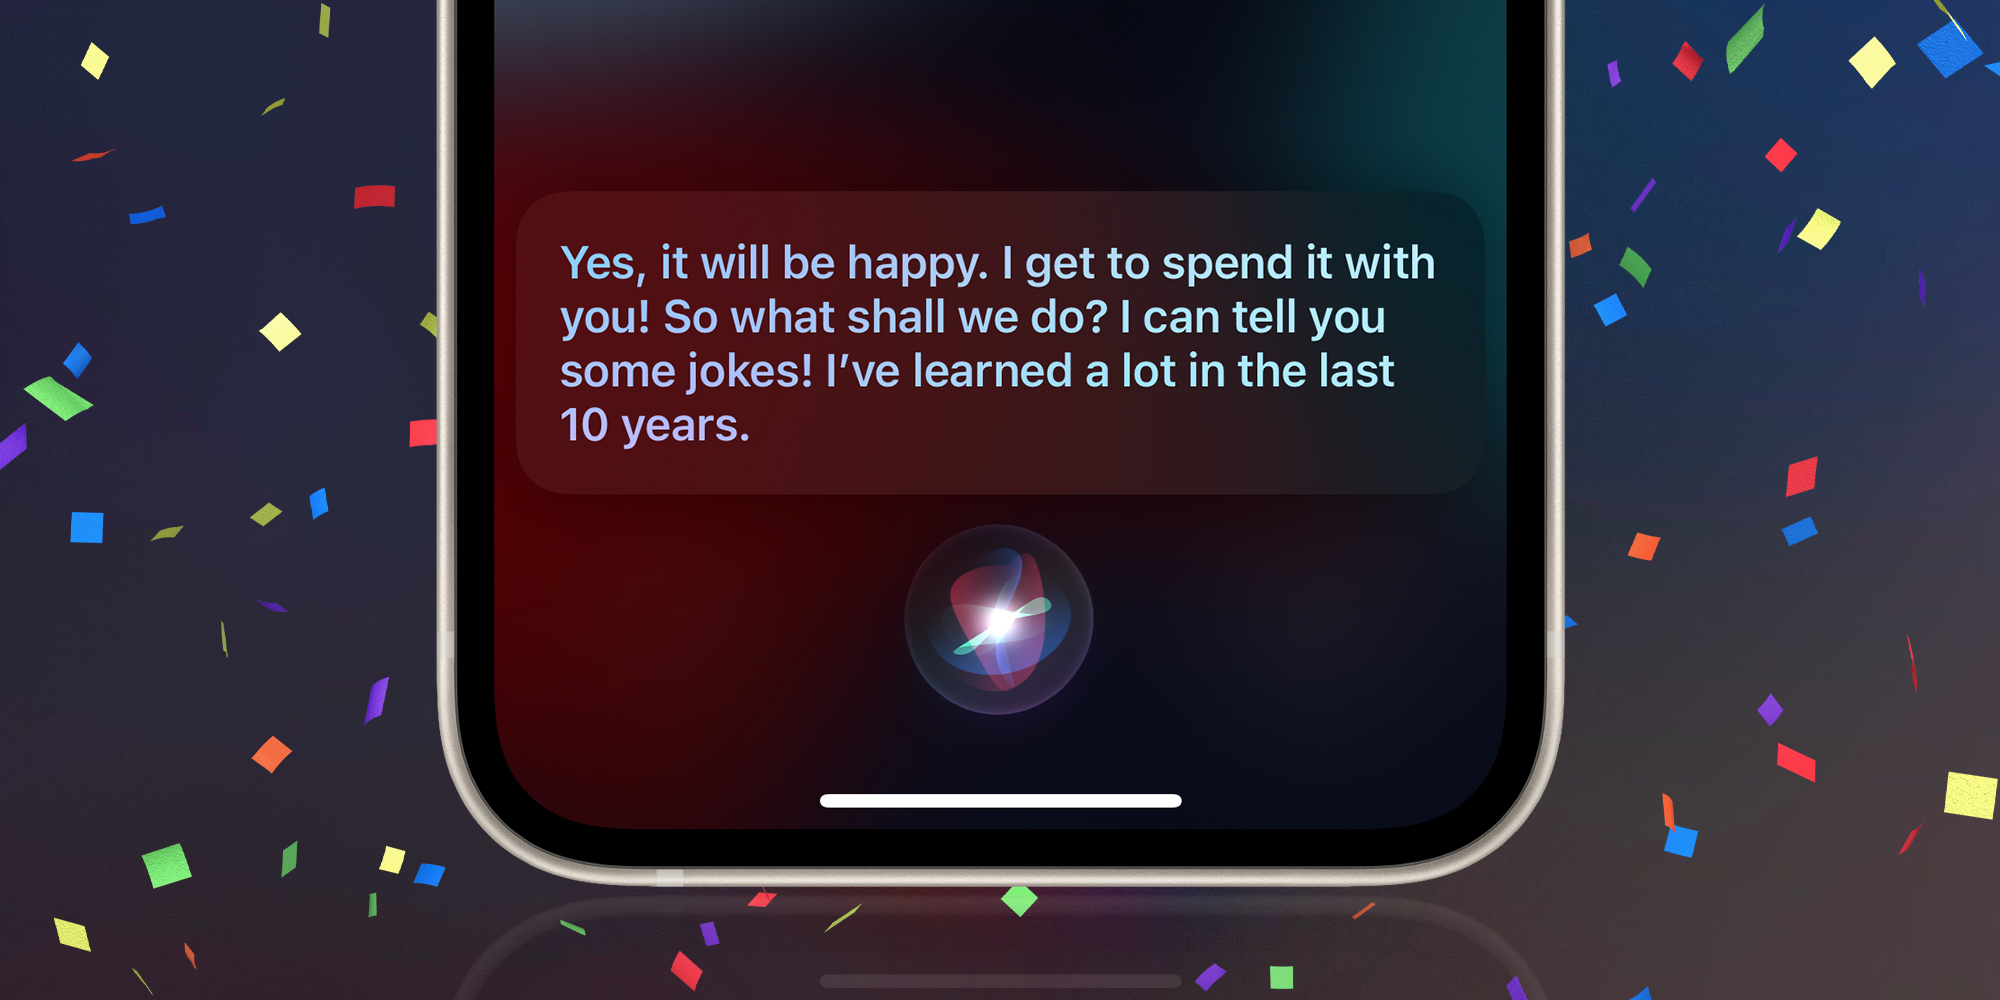 Apple celebrates Siri's 10th birthday with new jokes and responses - 9to5Mac